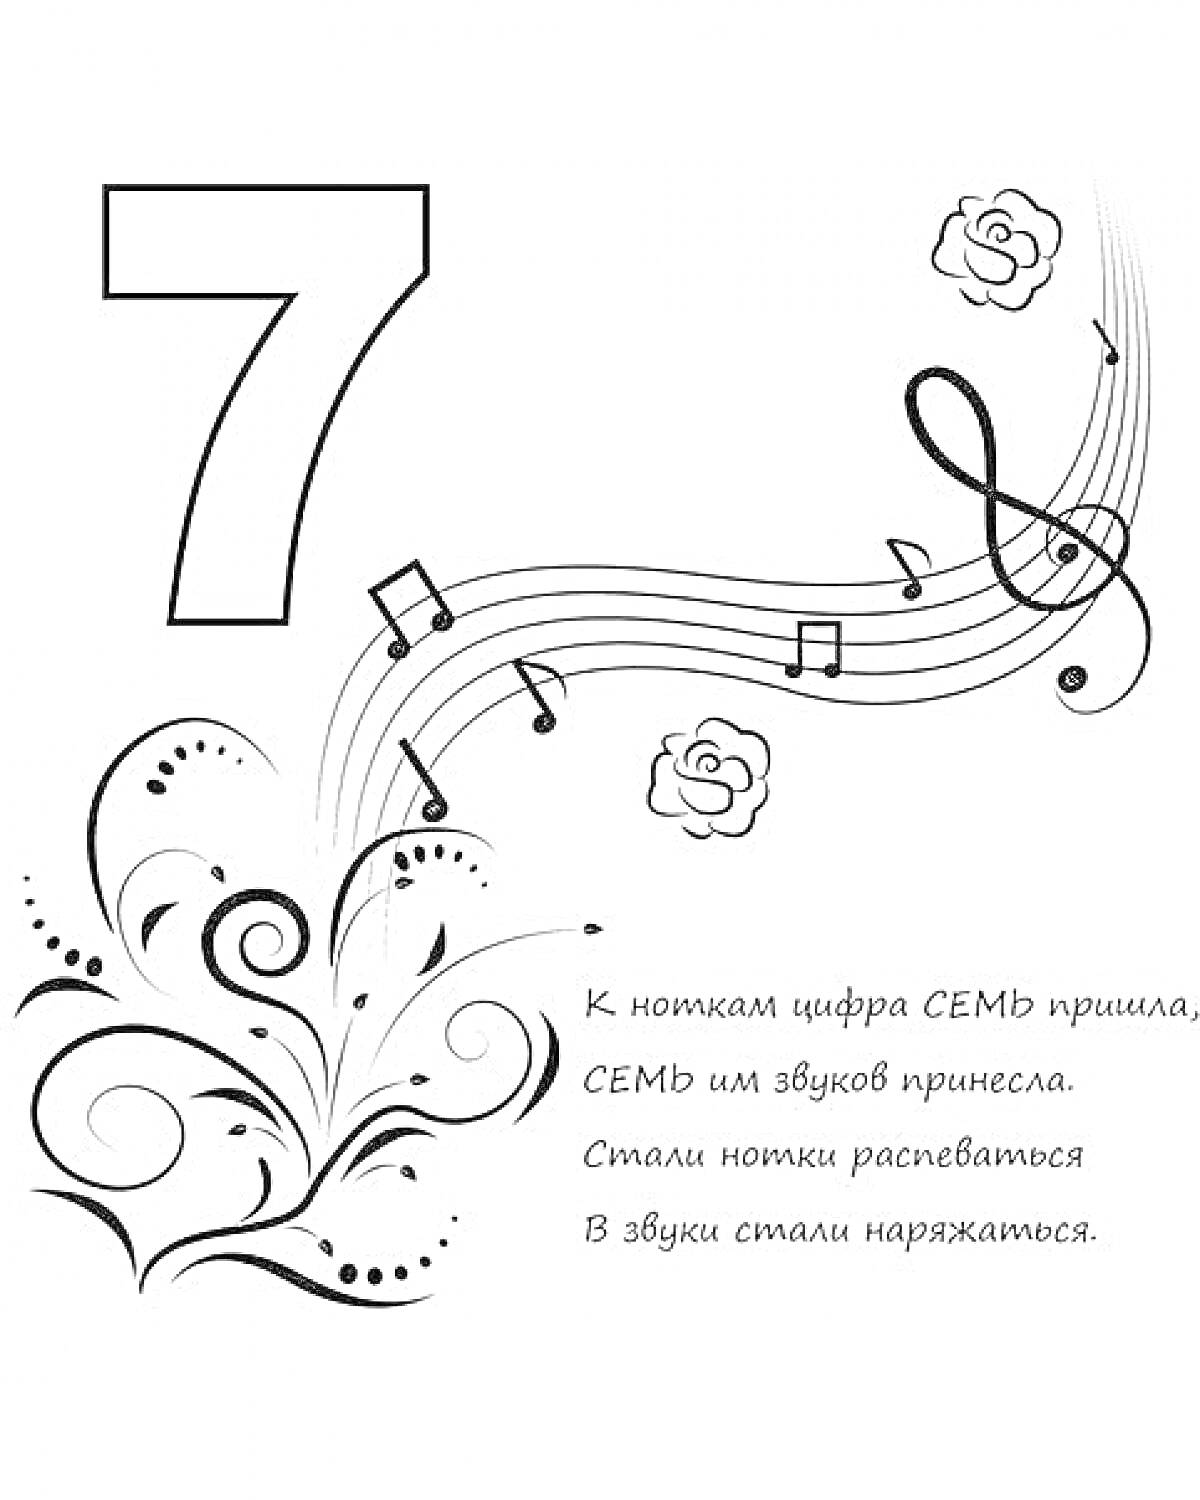 На раскраске изображено: Цифра 7, Музыкальные ноты, Цветы, Текст